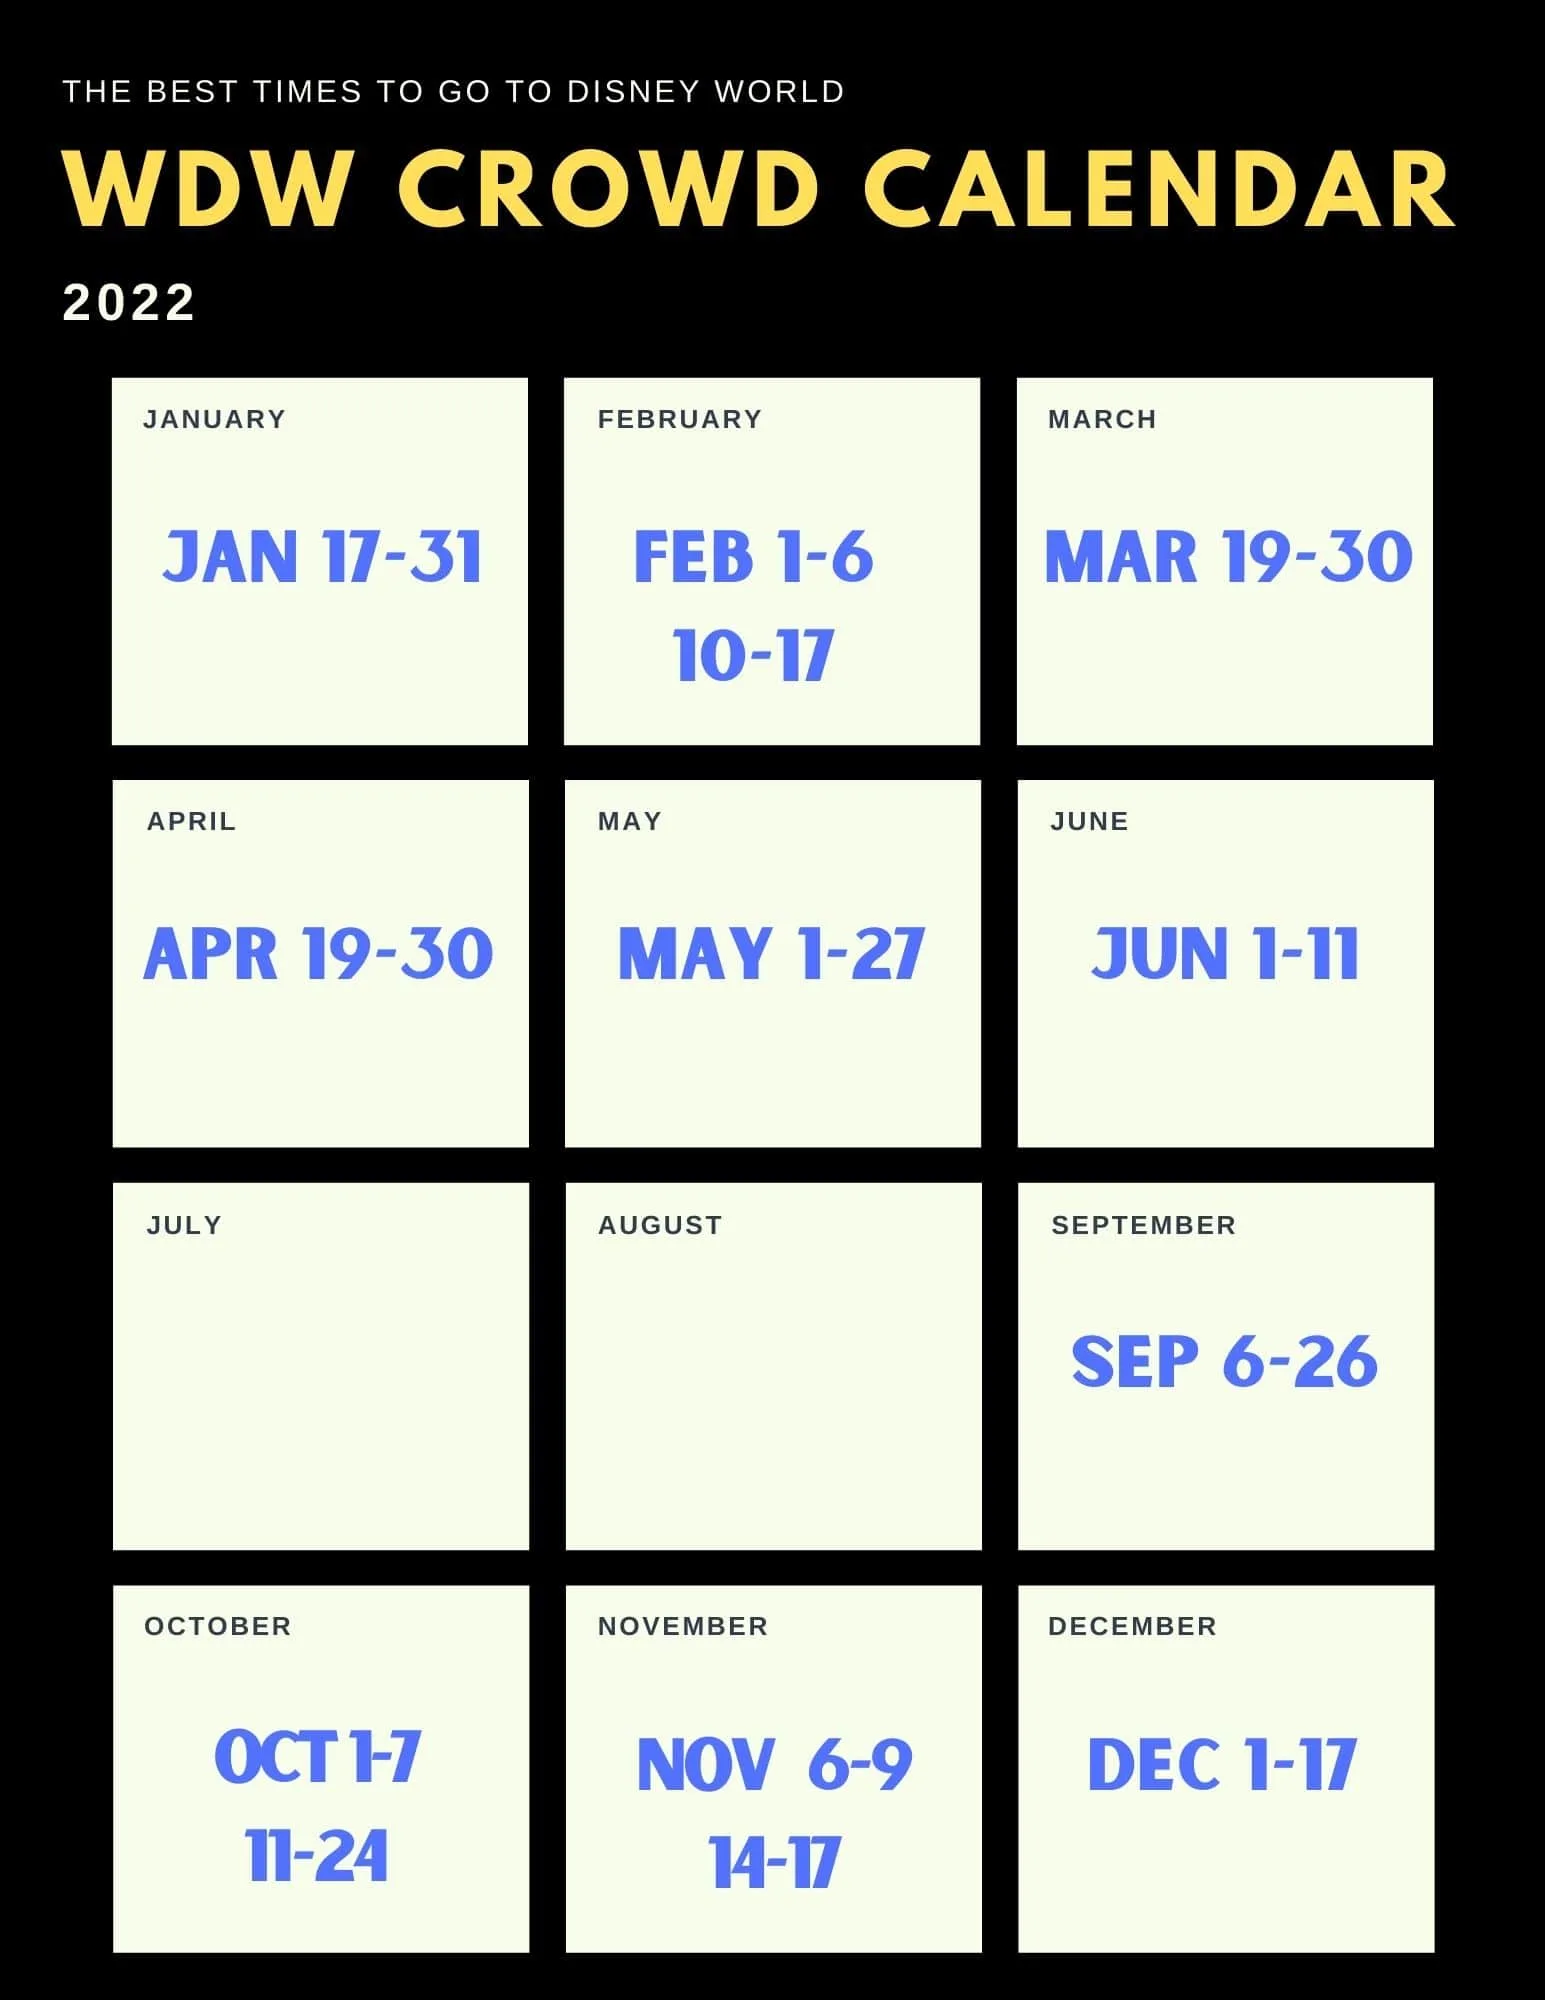 Disney Crowd Calendar November 2022 Disney World Crowd Calendar 2022 - Disney Insider Tips